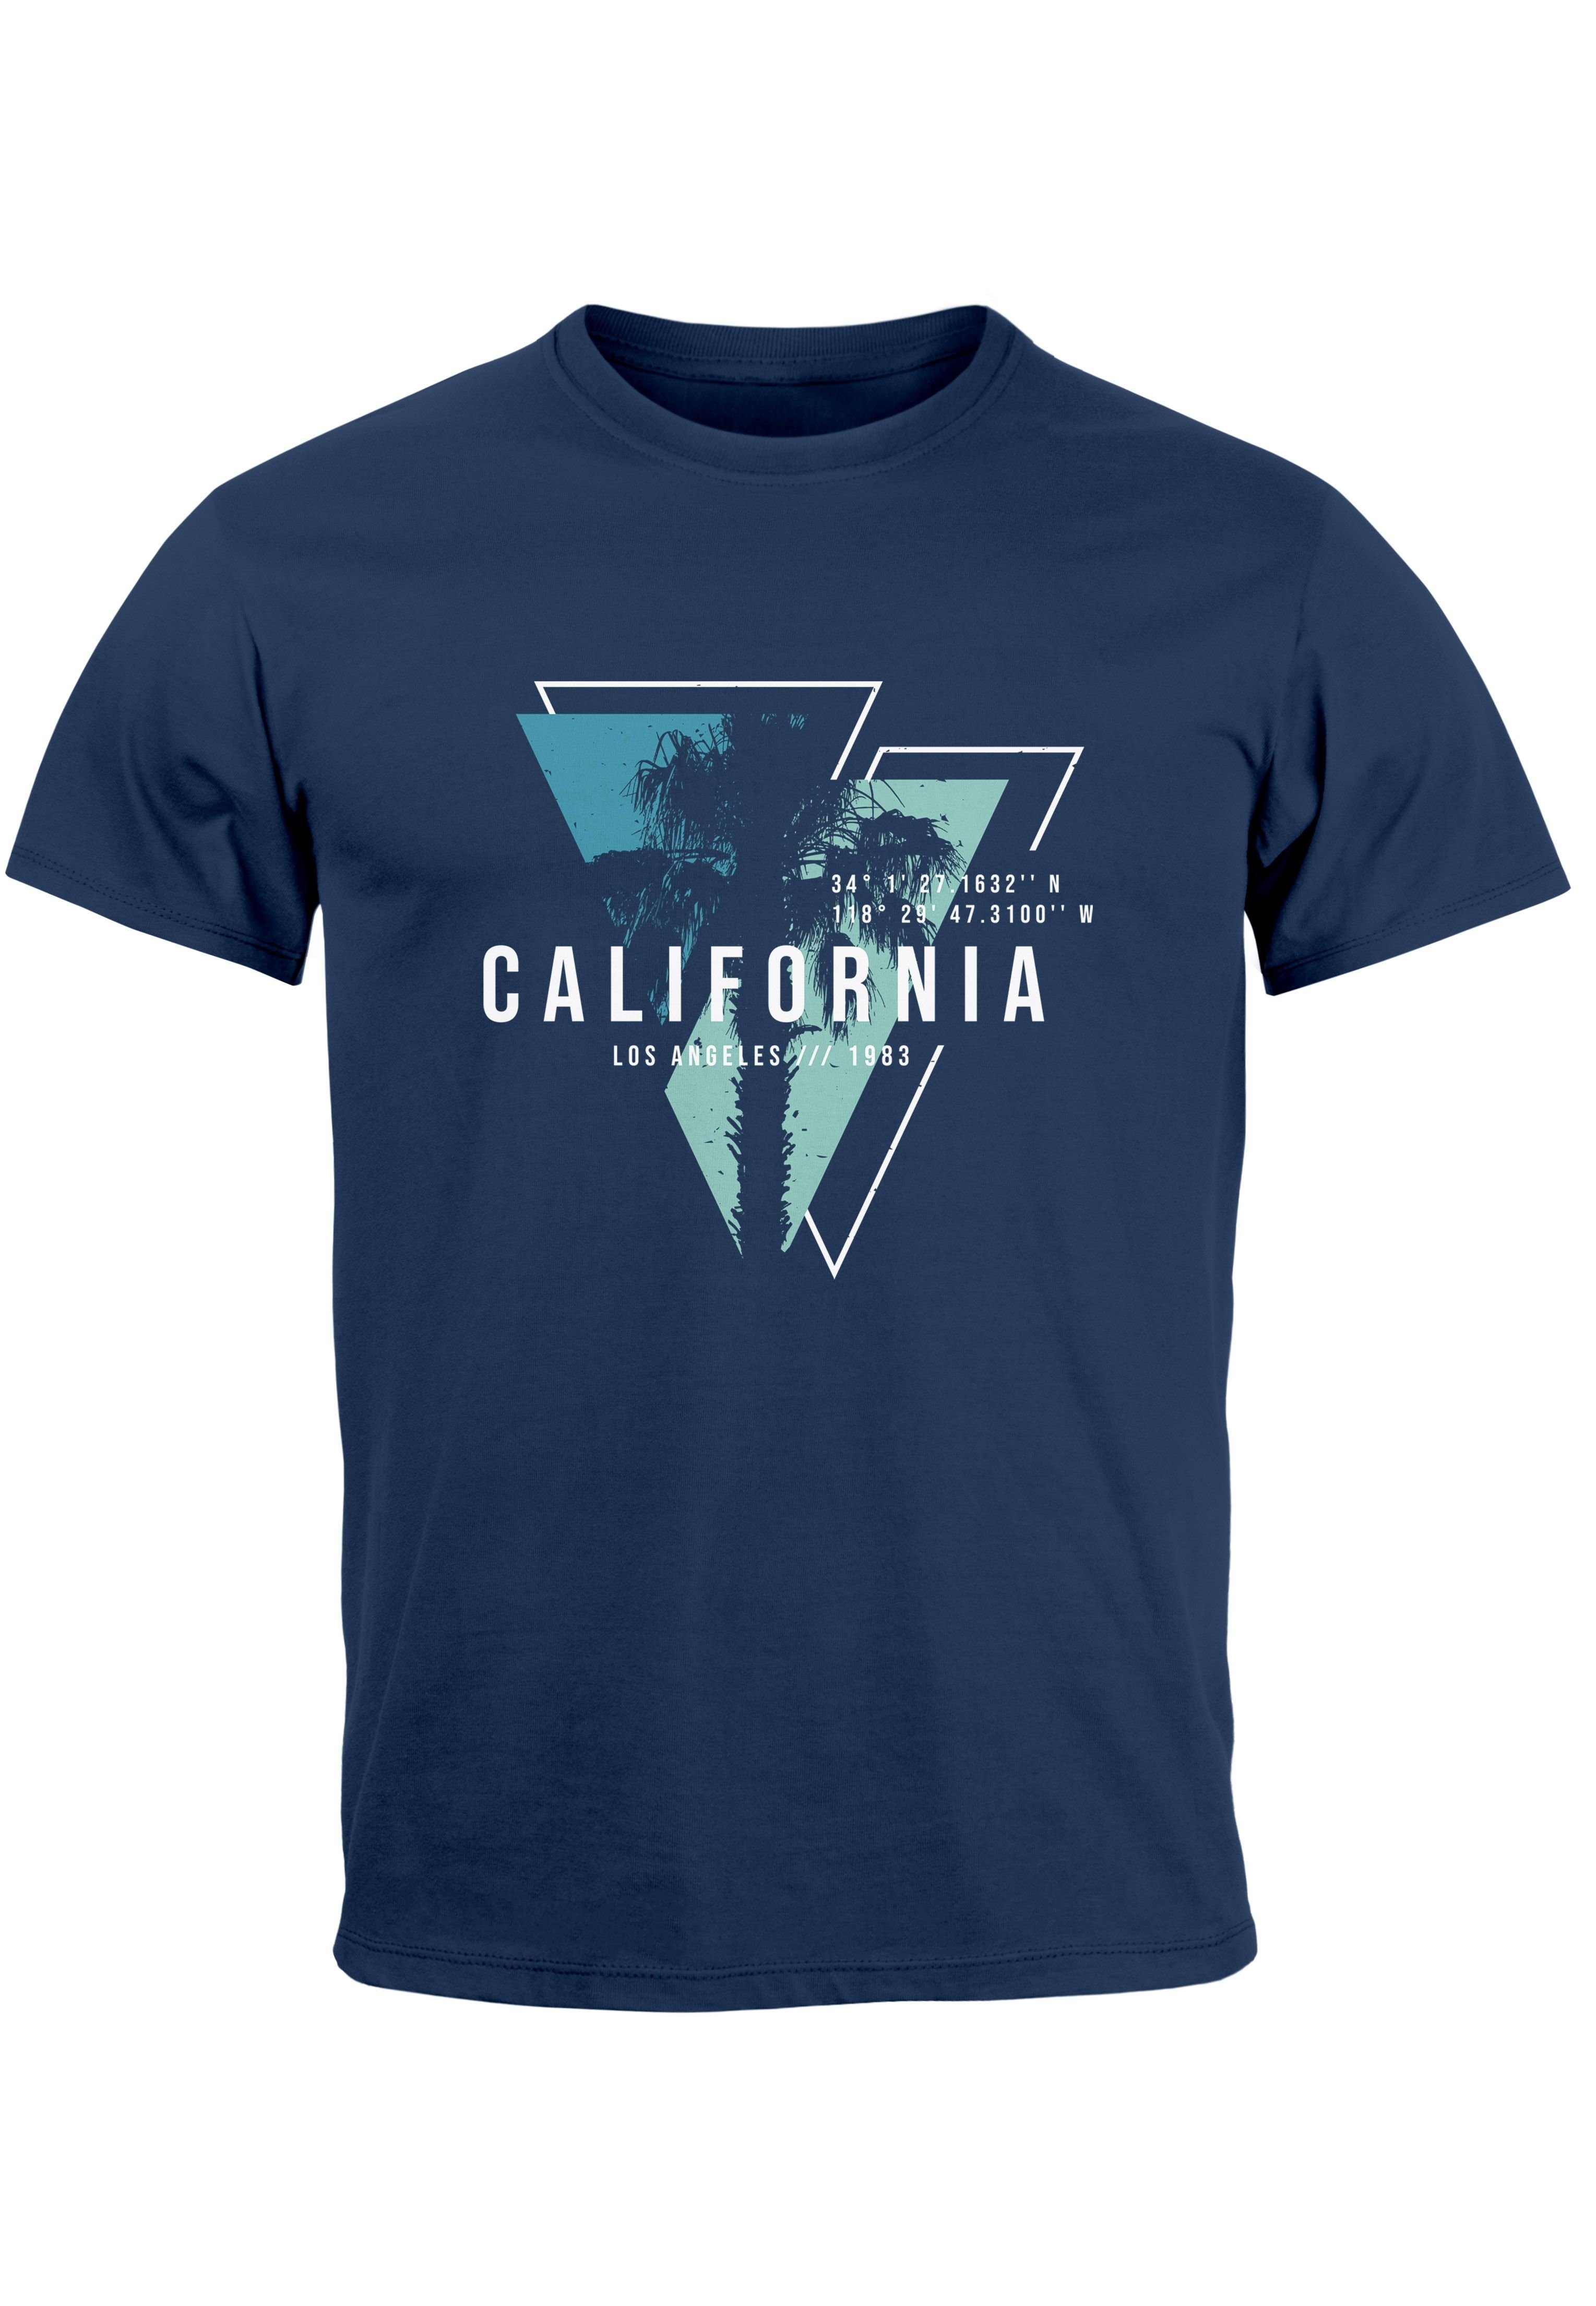 Neverless Print-Shirt Herren T-Shirt California Los Angeles Surfing Motiv Sommer Fashion USA mit Print navy-blau